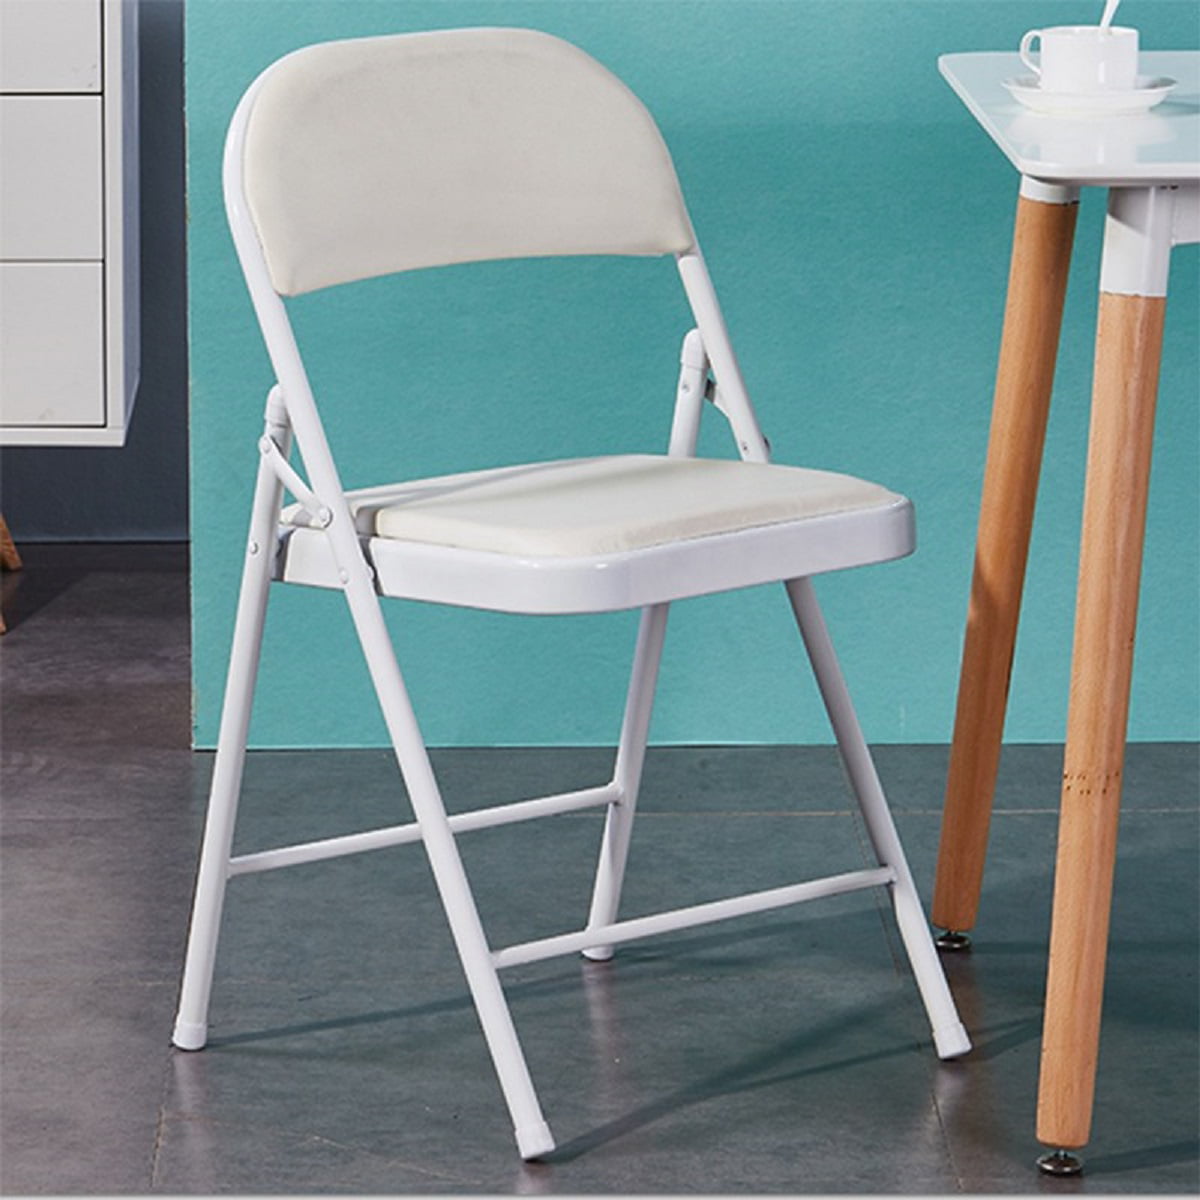 Minimalist Folding Chairs Walmart Padded for Simple Design